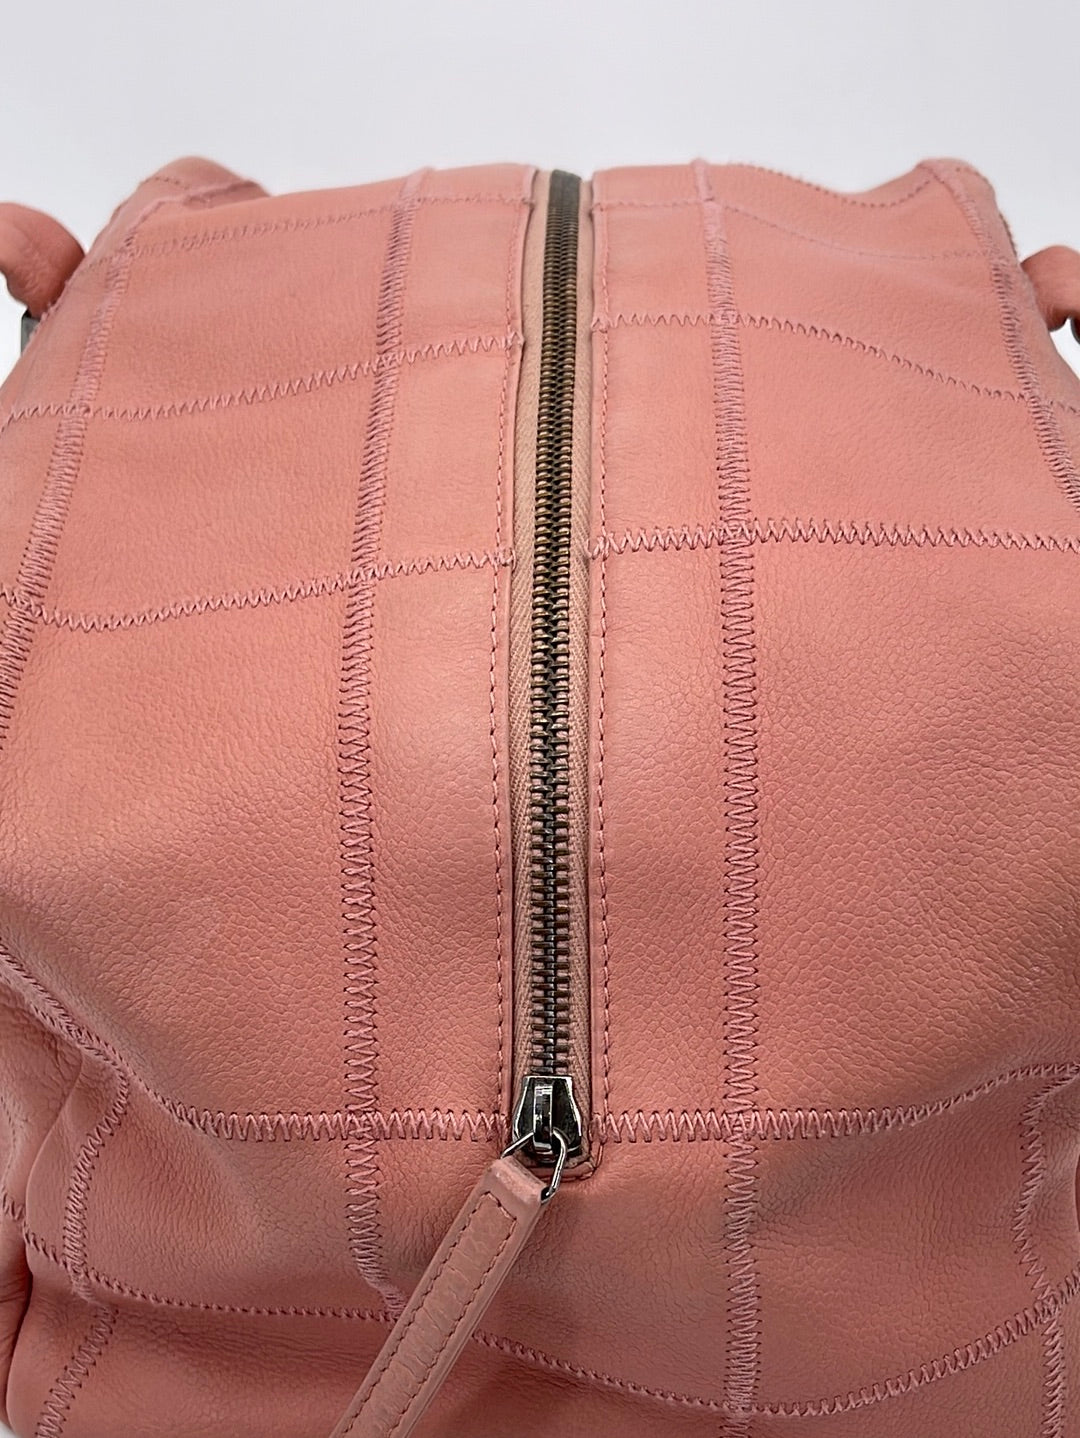 Pink Chanel Bag - 327 For Sale on 1stDibs